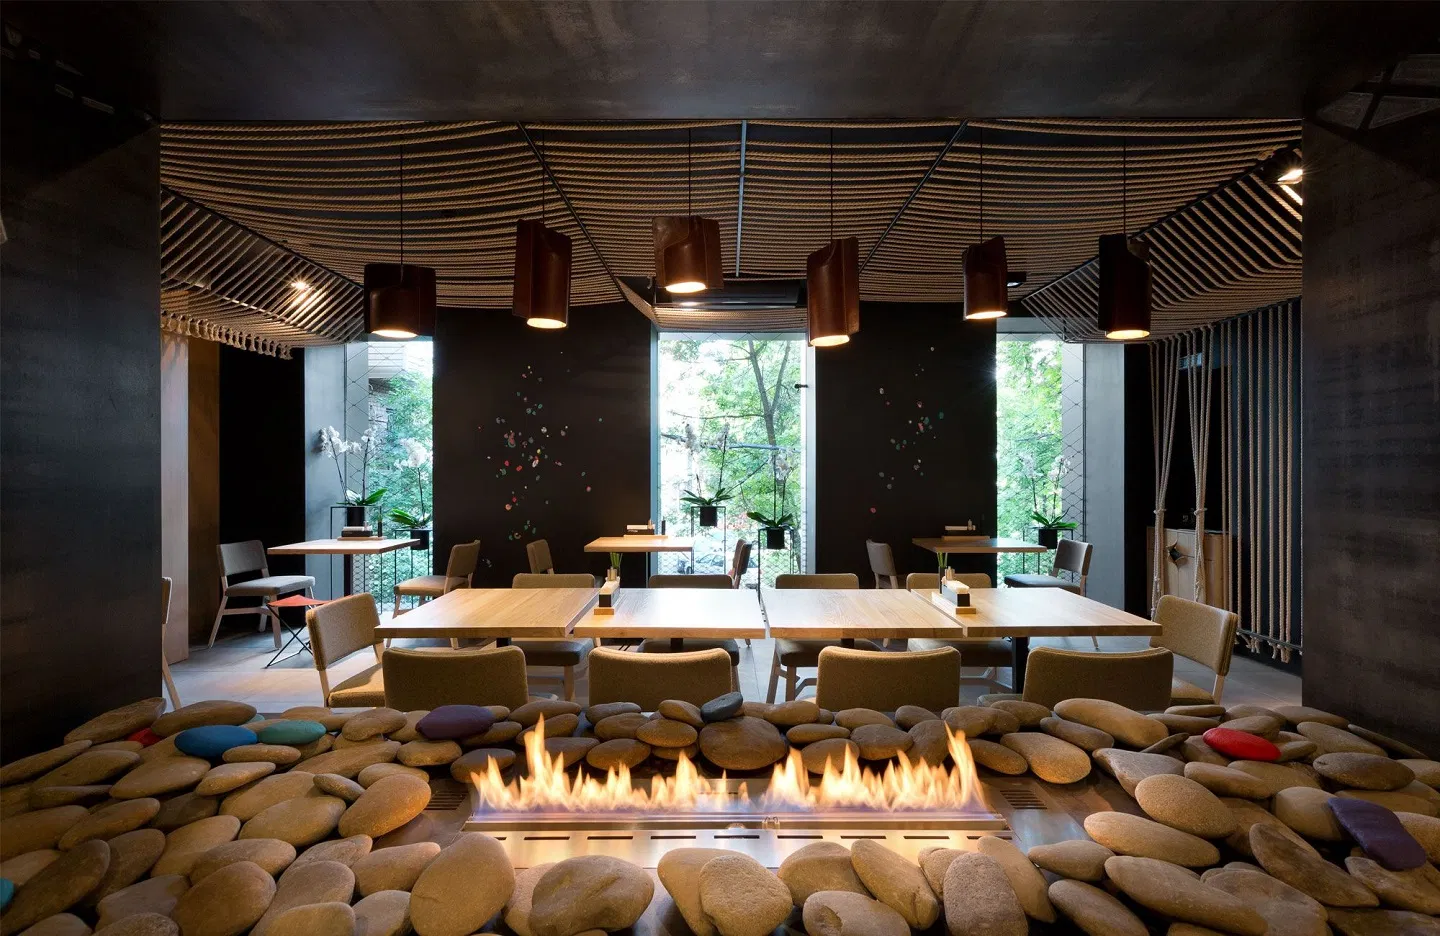 5. Layout and Flow: T-Design Restaurant Interior